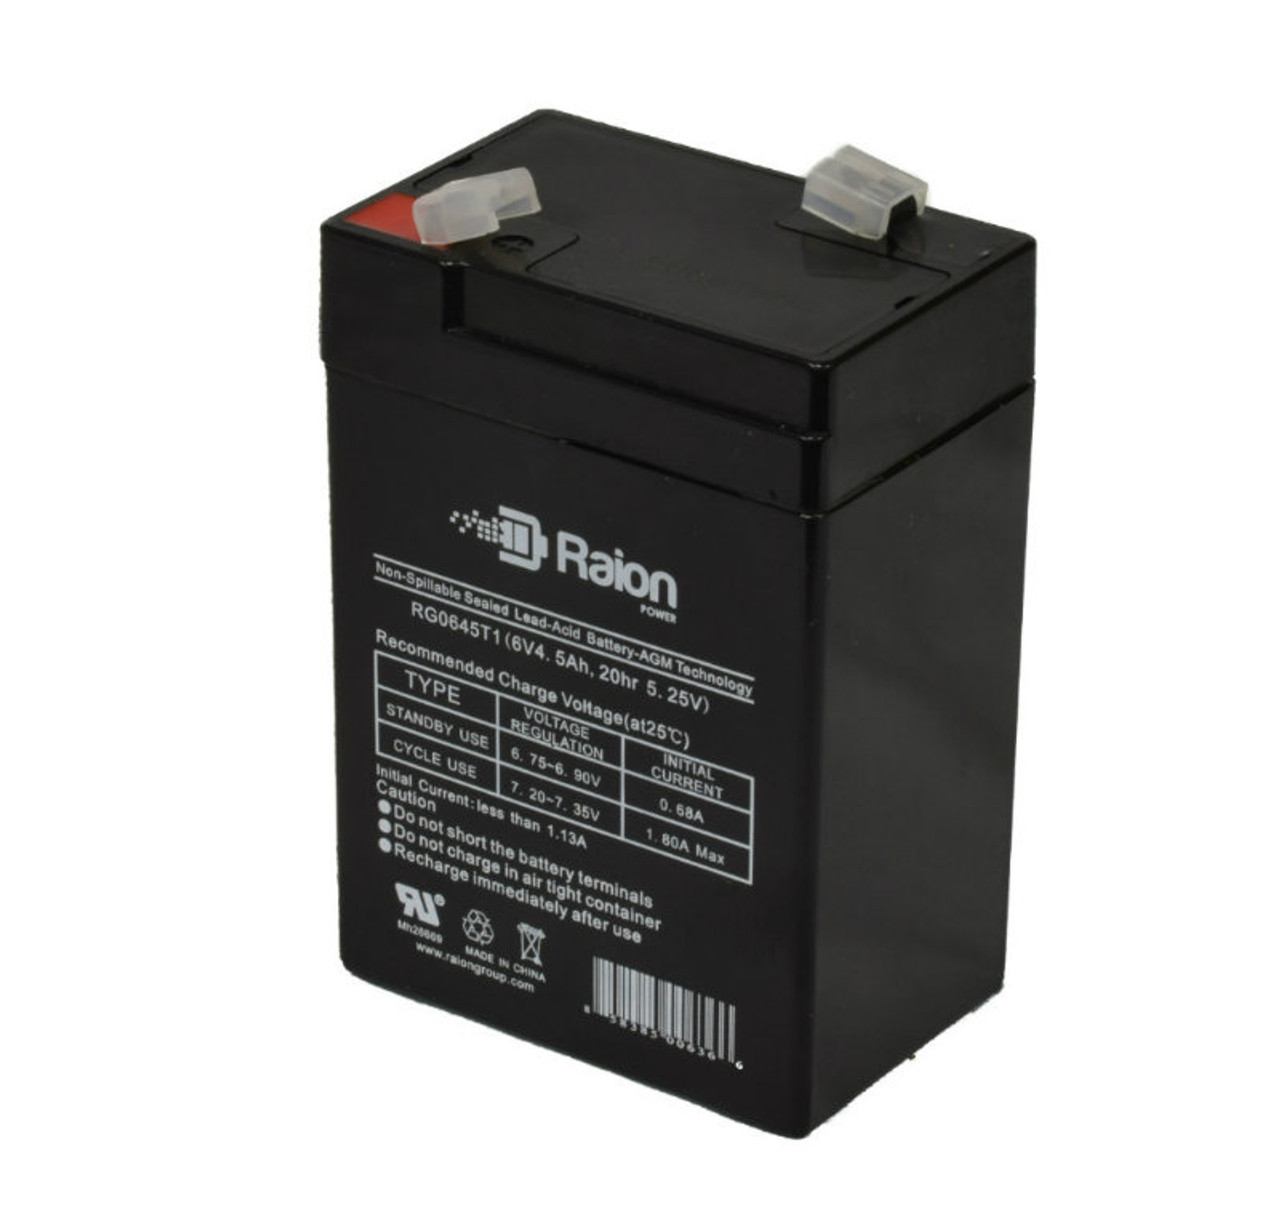 Raion Power RG0645T1 6V 4.5Ah Replacement Battery Cartridge for Razor 20159640 Jr. Lil E Green